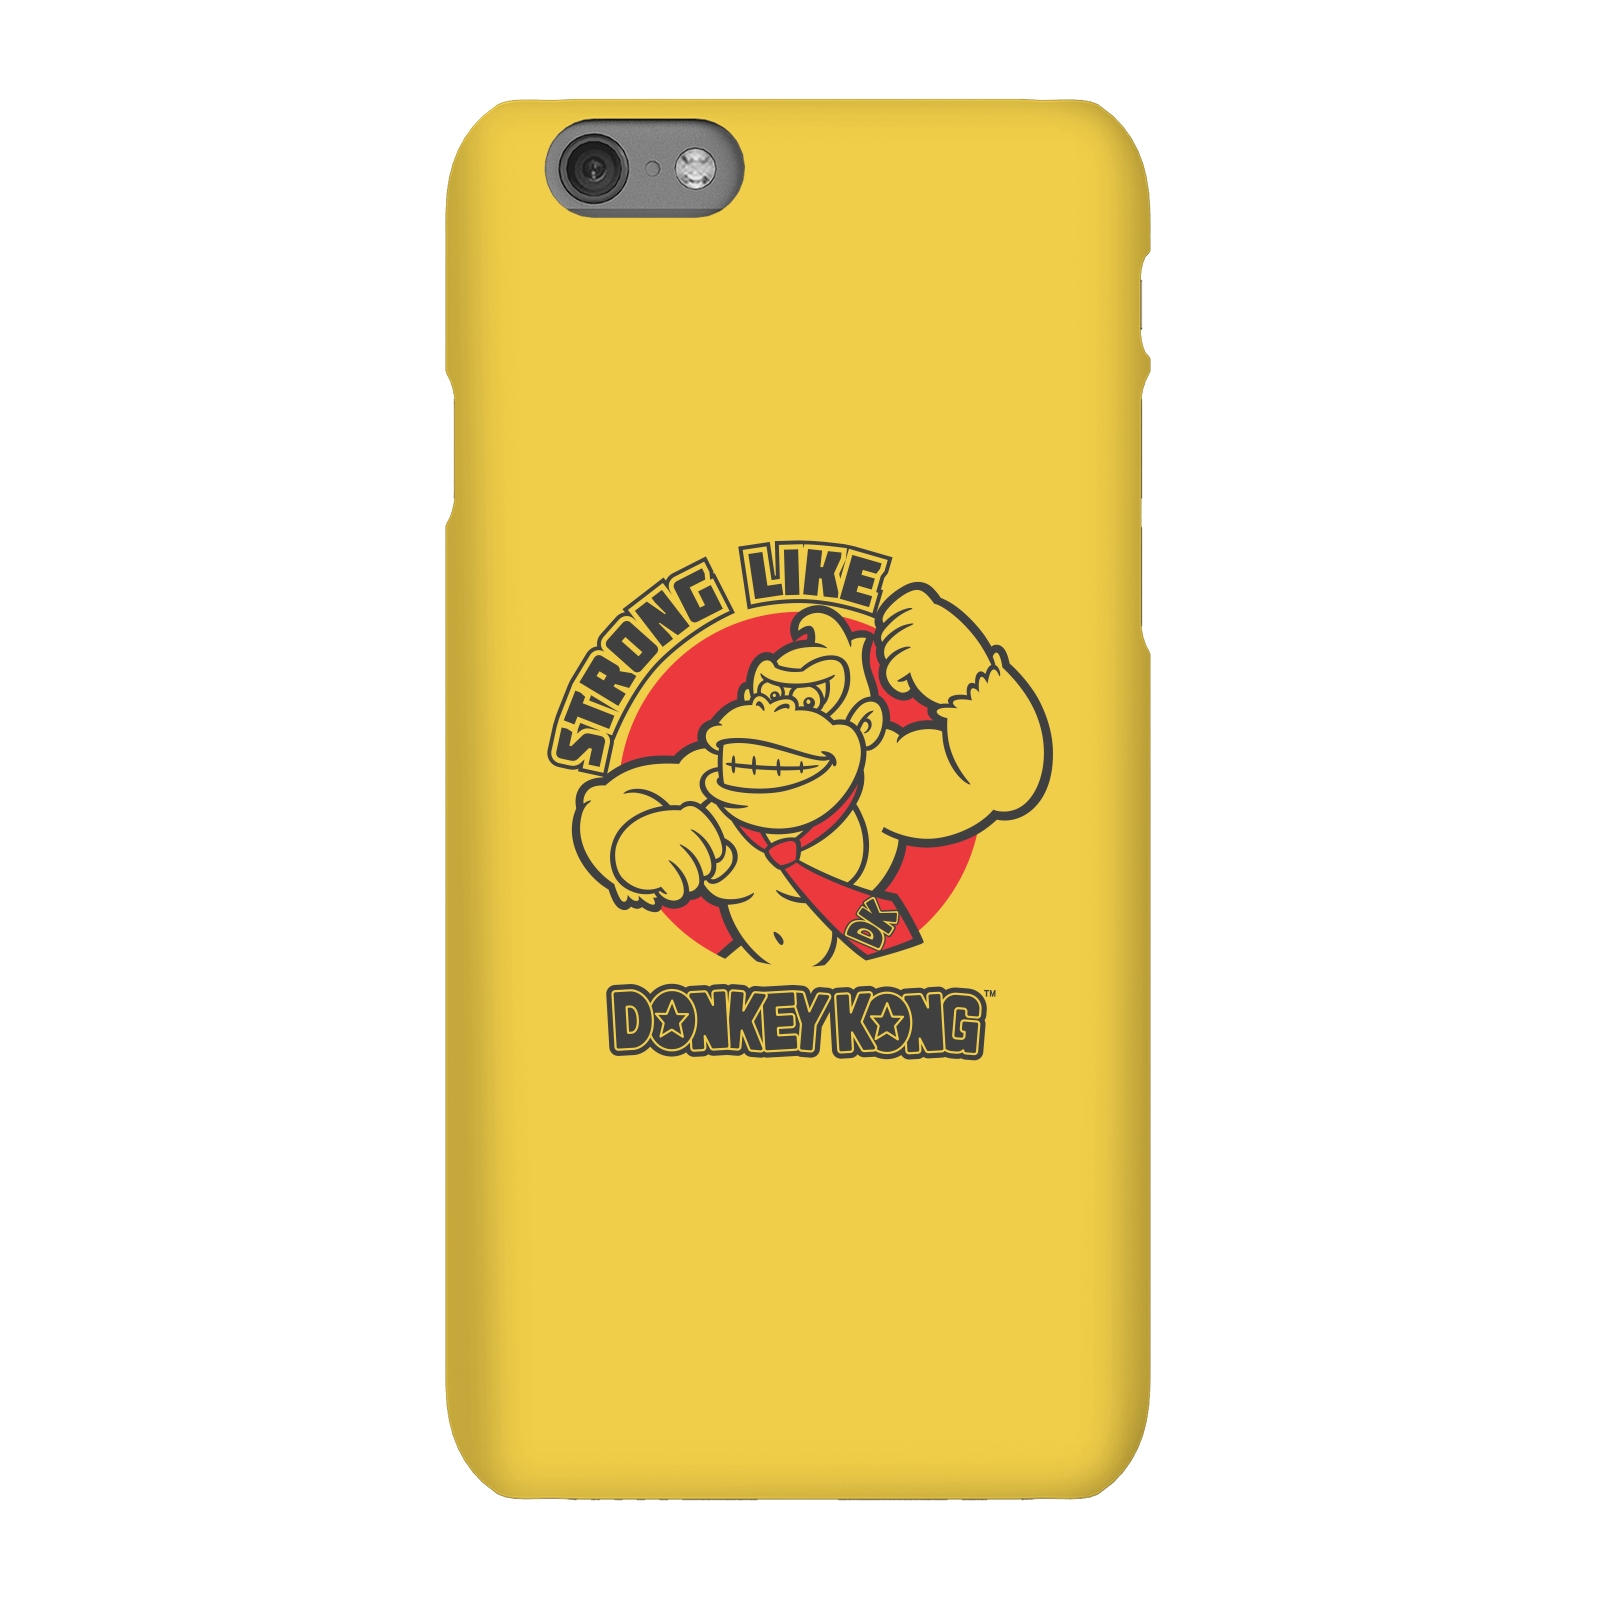 Nintendo Donkey Kong Strong Like Donkey Kong Phone Case - iPhone 6S - Snap Case - Gloss